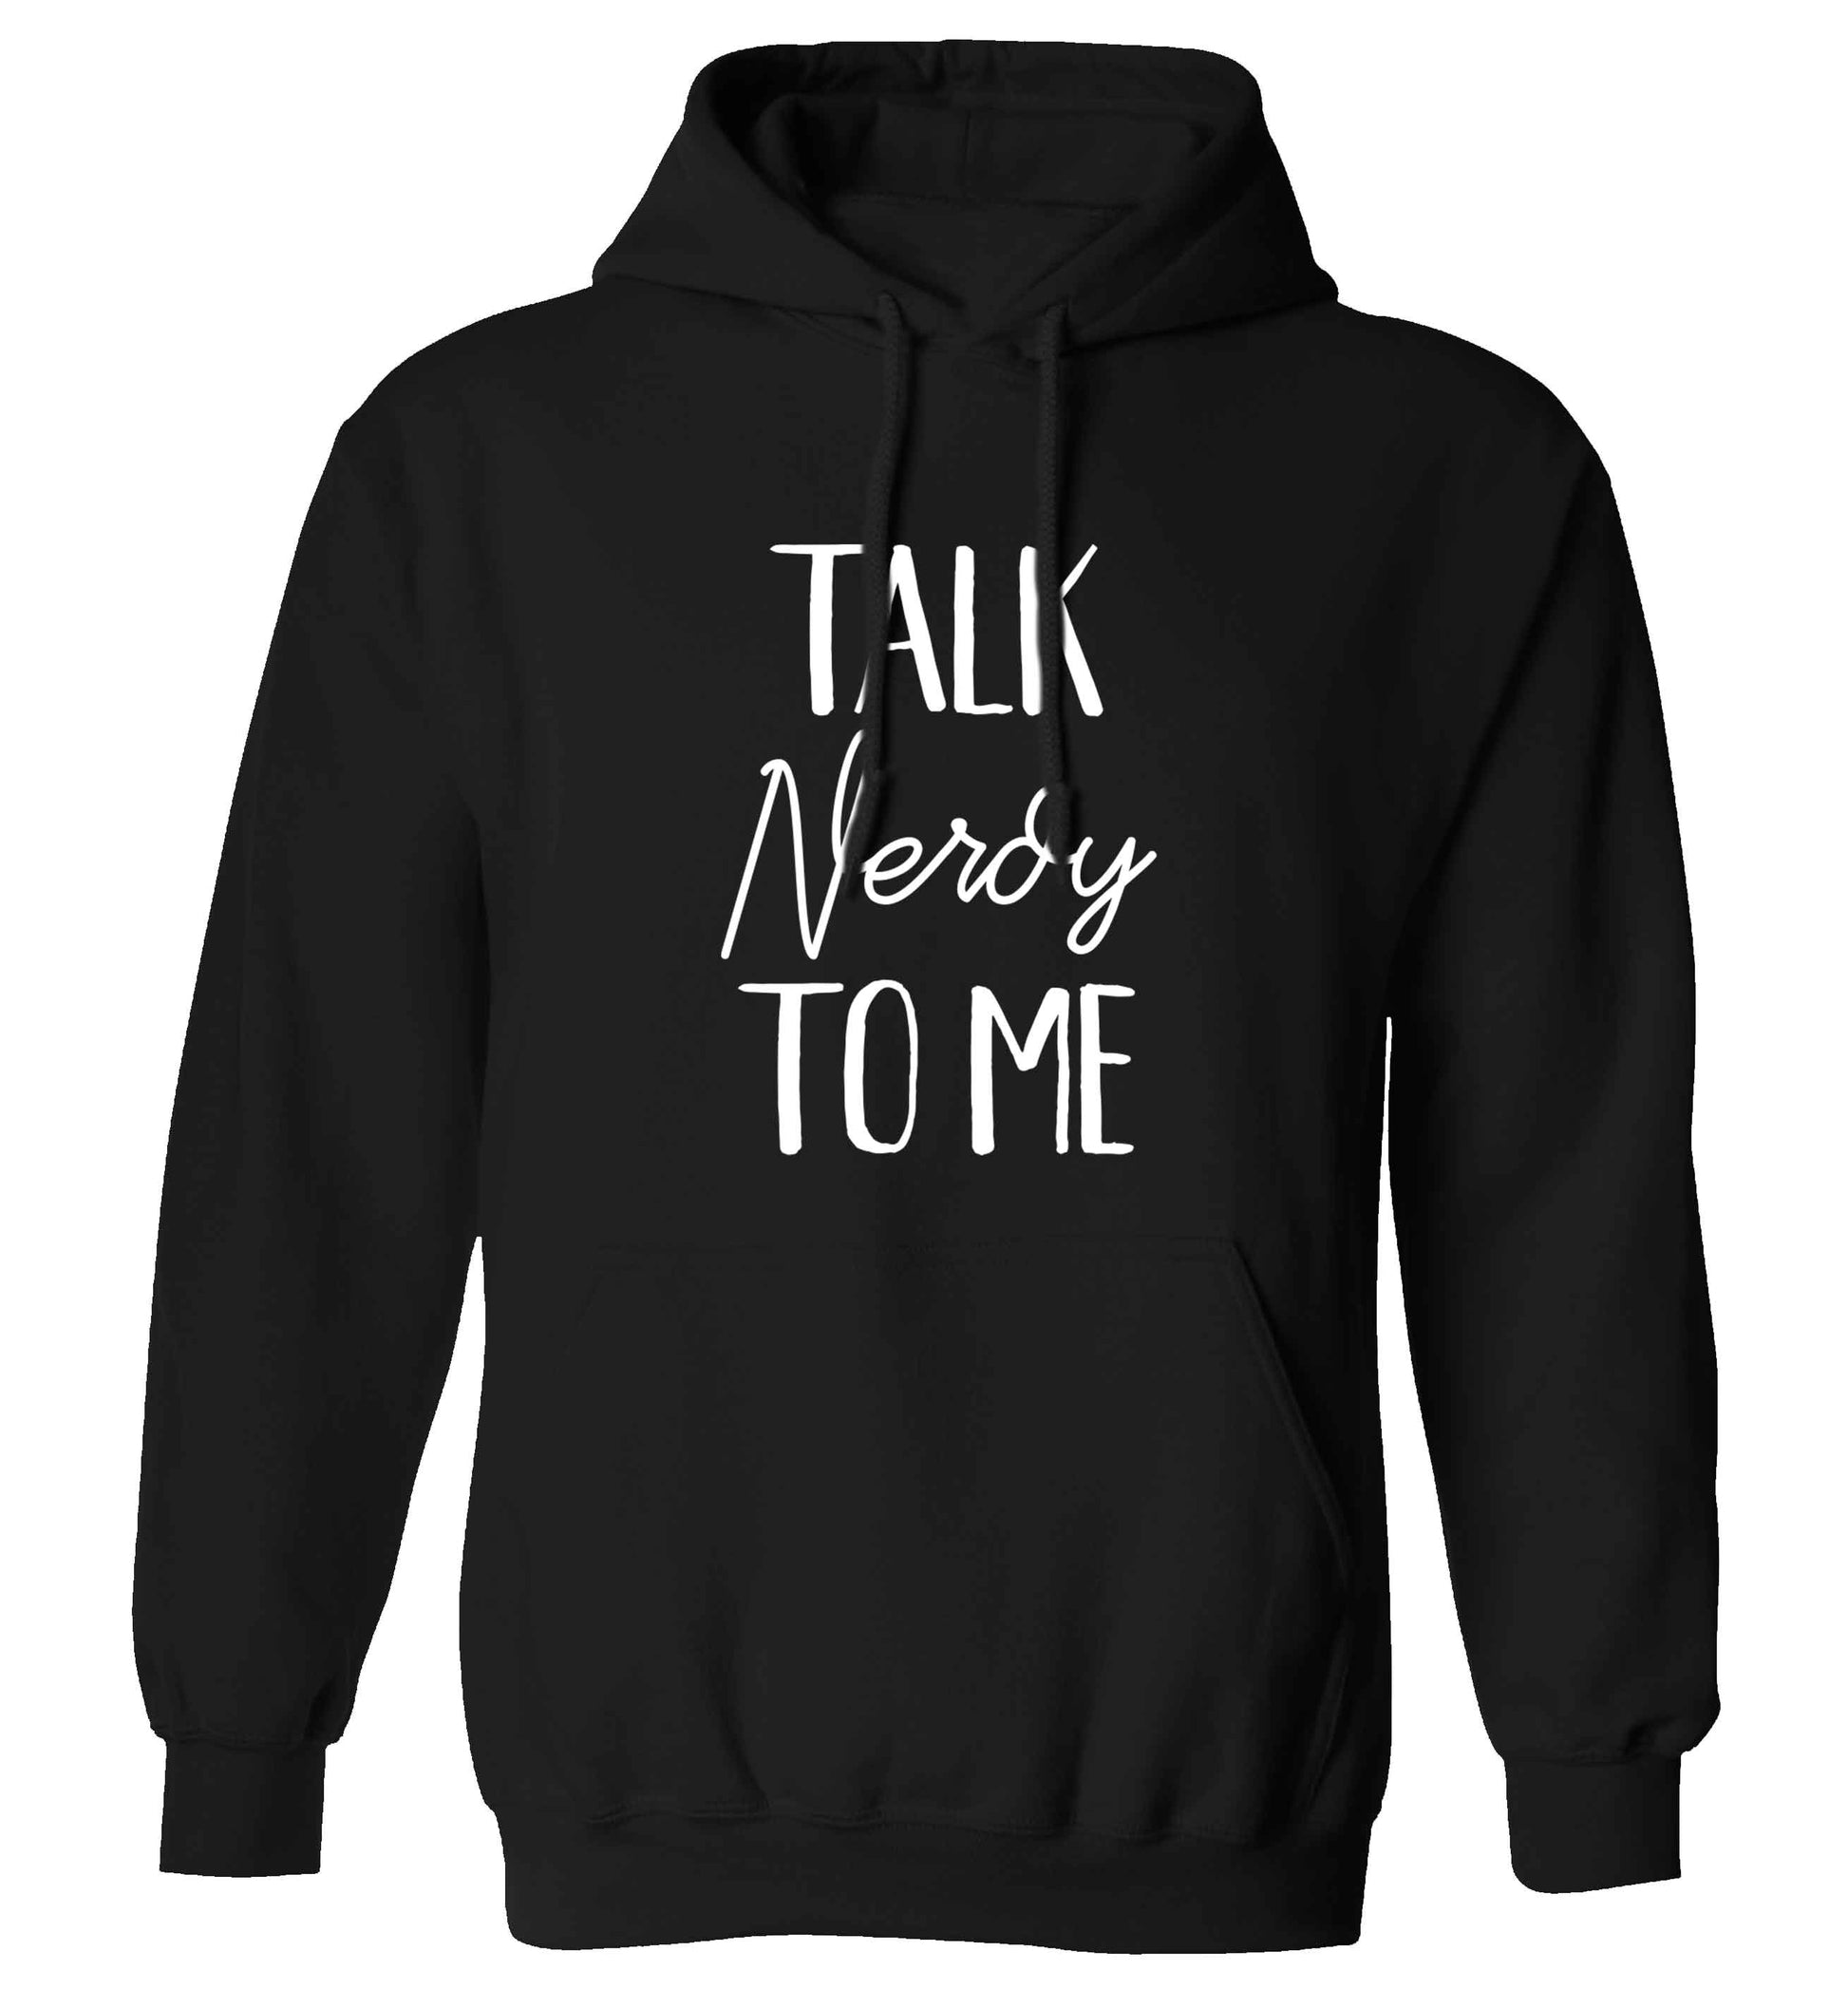 Talk nerdy to me adults unisex black hoodie 2XL